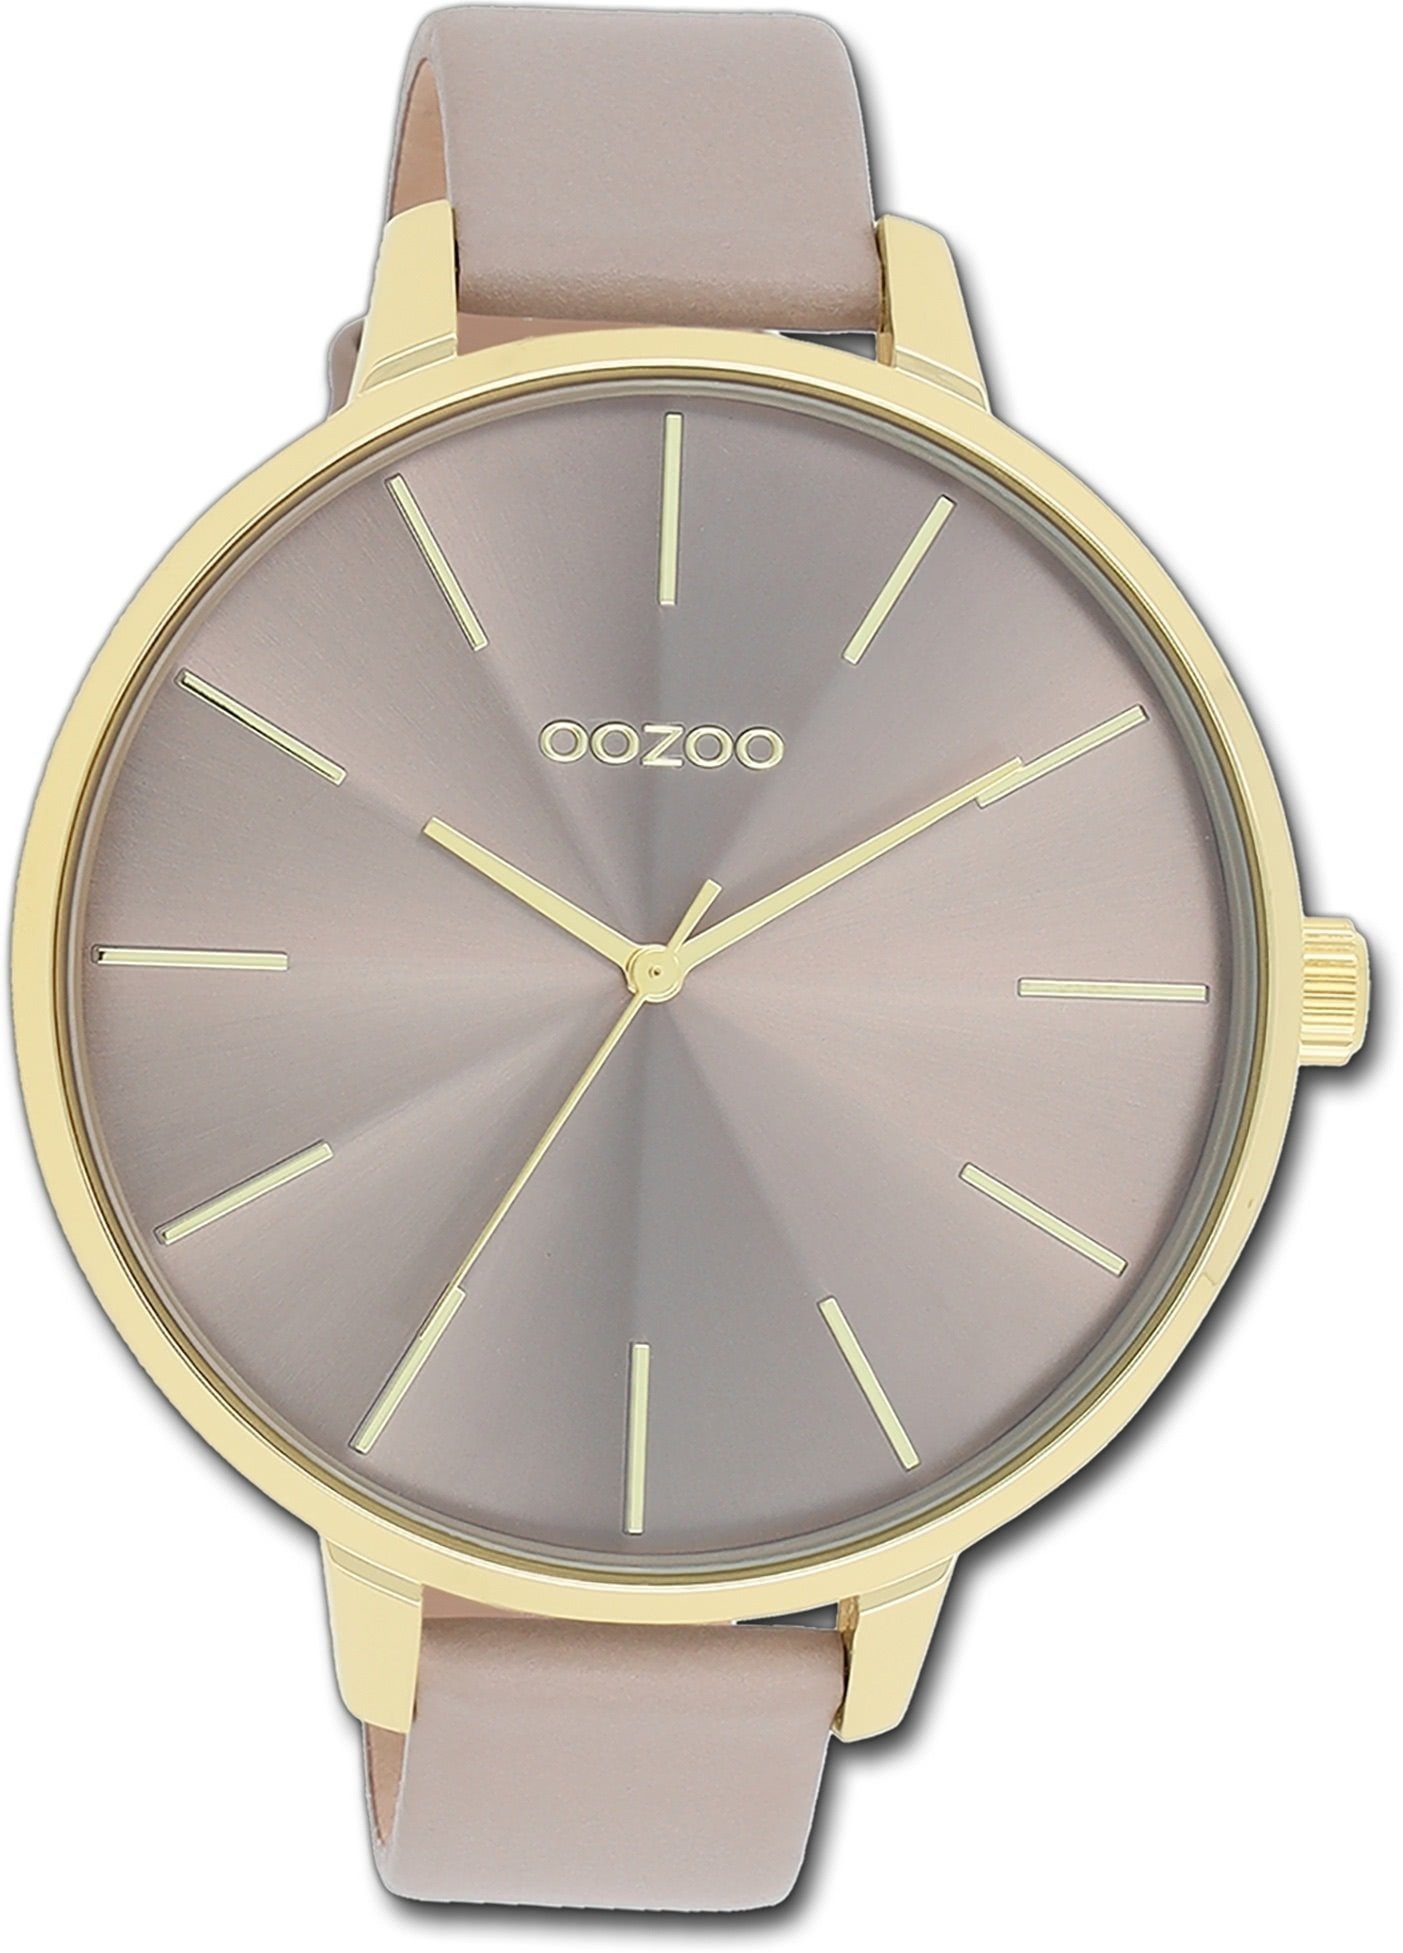 OOZOO Quarzuhr Oozoo Damen Armbanduhr Timepieces, Damenuhr Lederarmband taupe, braun, rundes Gehäuse, extra groß (48mm) | Quarzuhren